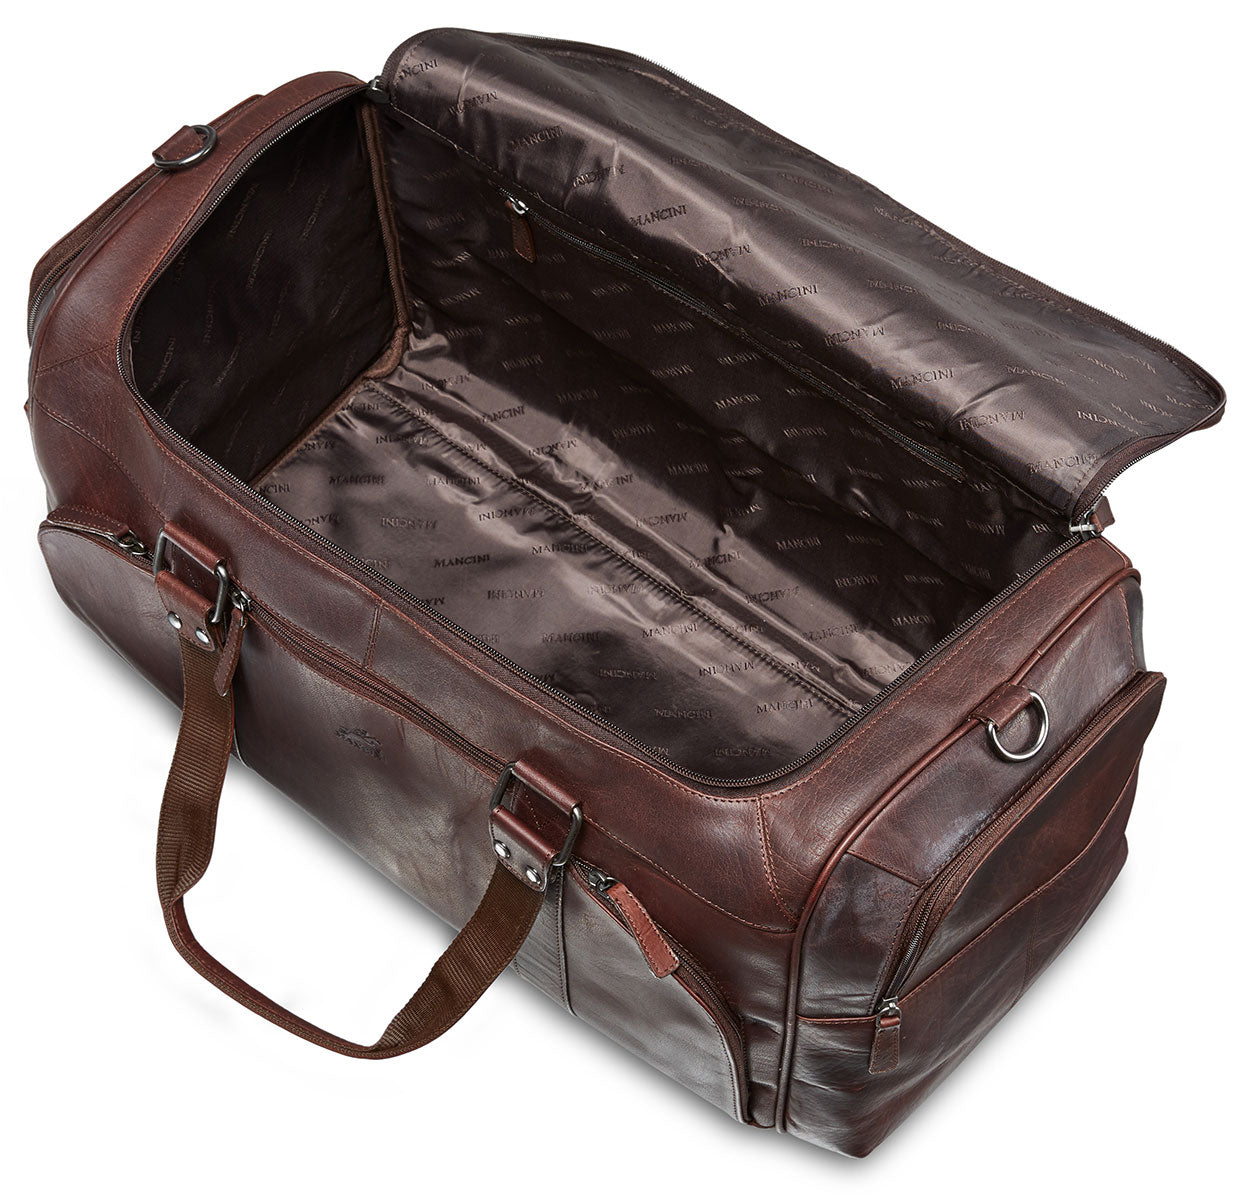 Mancini Leather Duffle Bag, 23" x 10" x 10.25", Brown